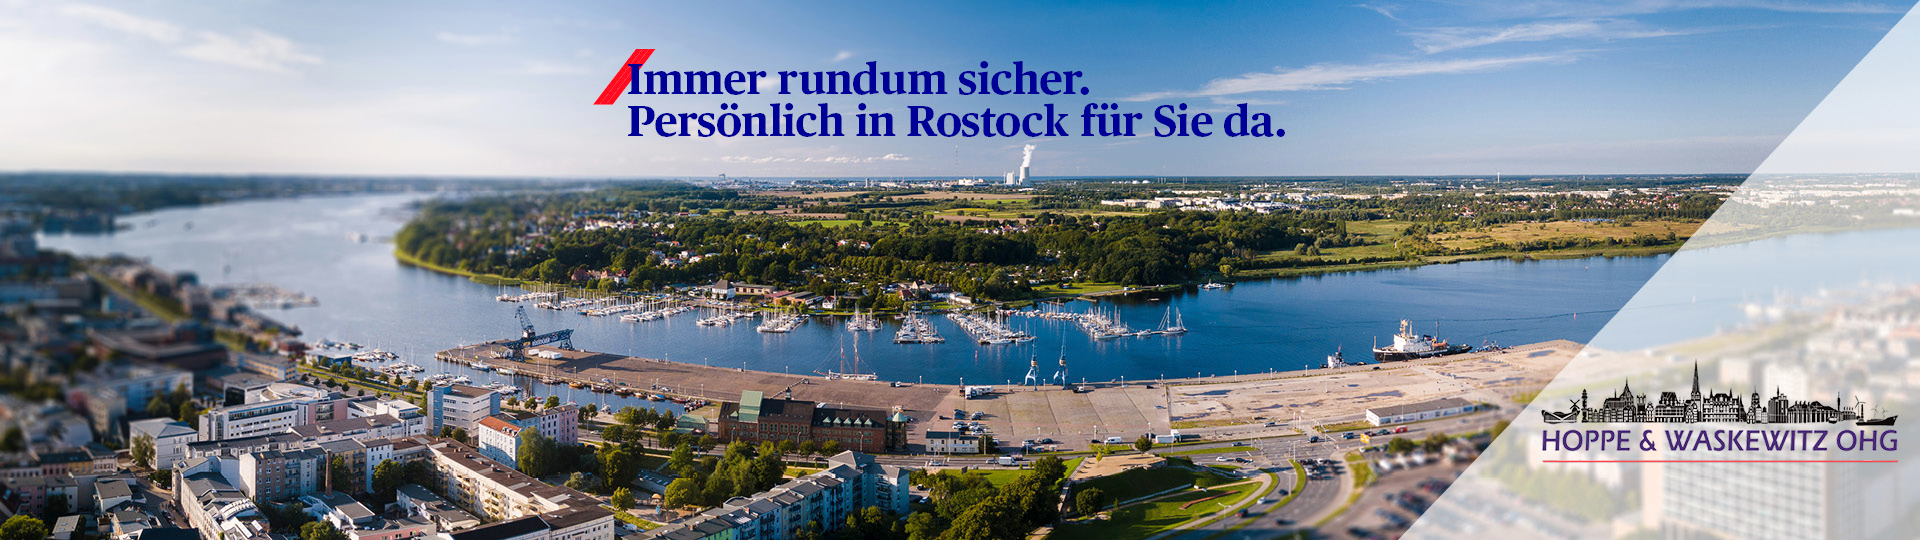 AXA Generalvertretung in Rostock Hoppe & Waskewitz oHG aus Rostock